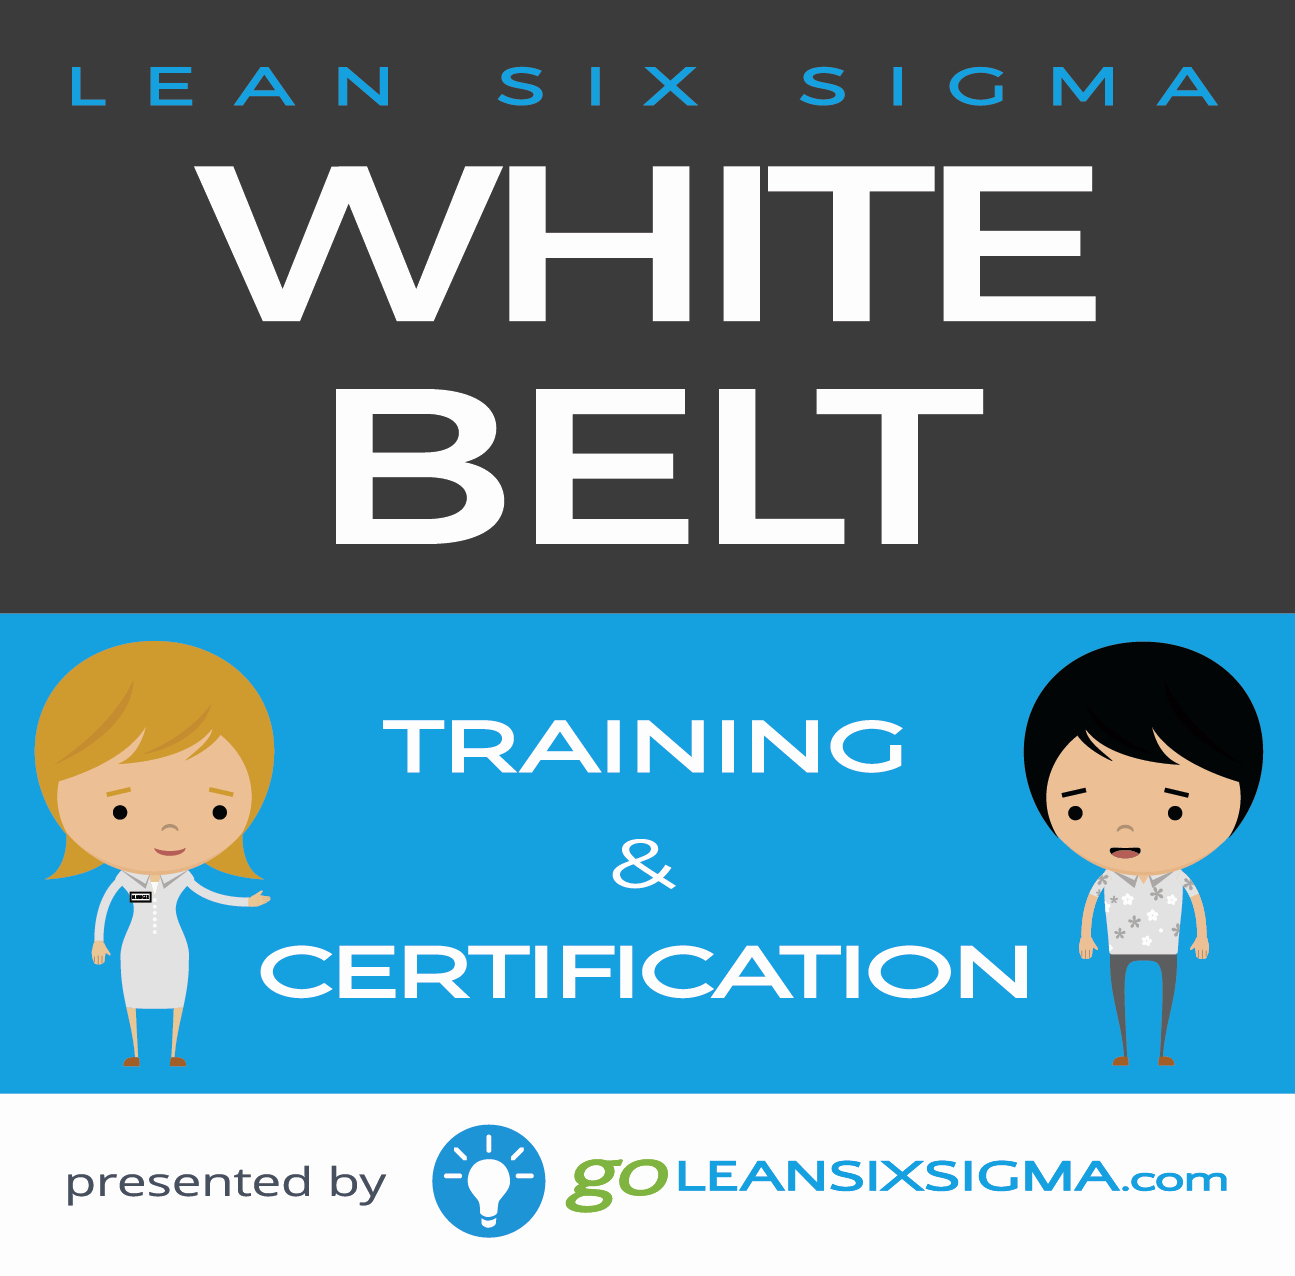 Free Black Belt Certificate Template Awesome Lean Six Sigma White Belt Training Goleansixsigma